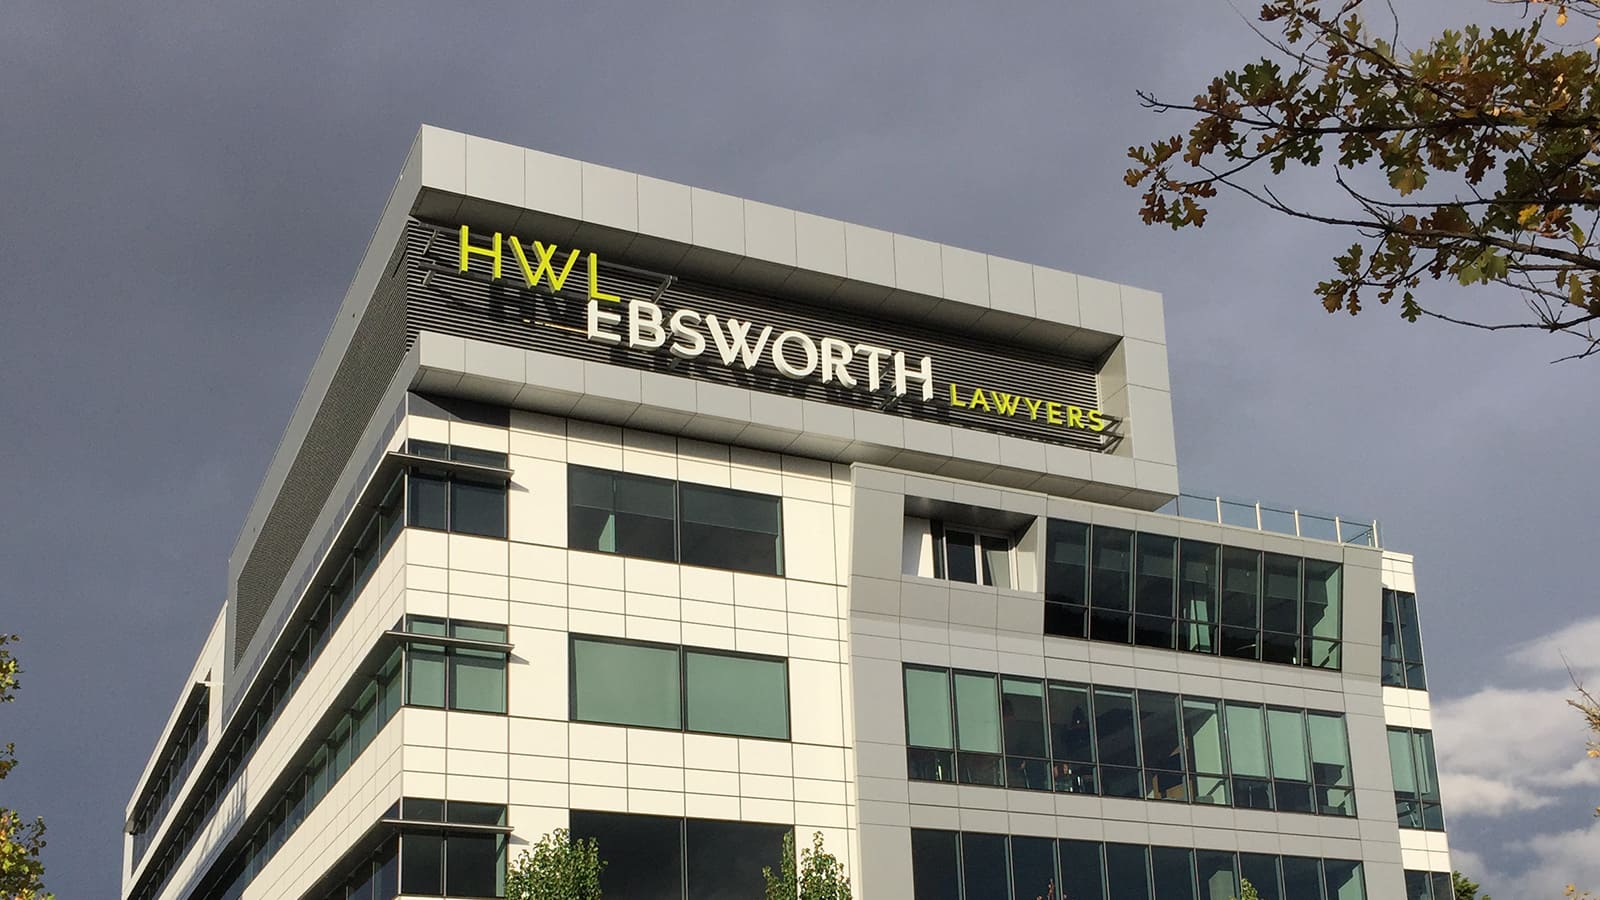 building-id-hwl-ebsworth